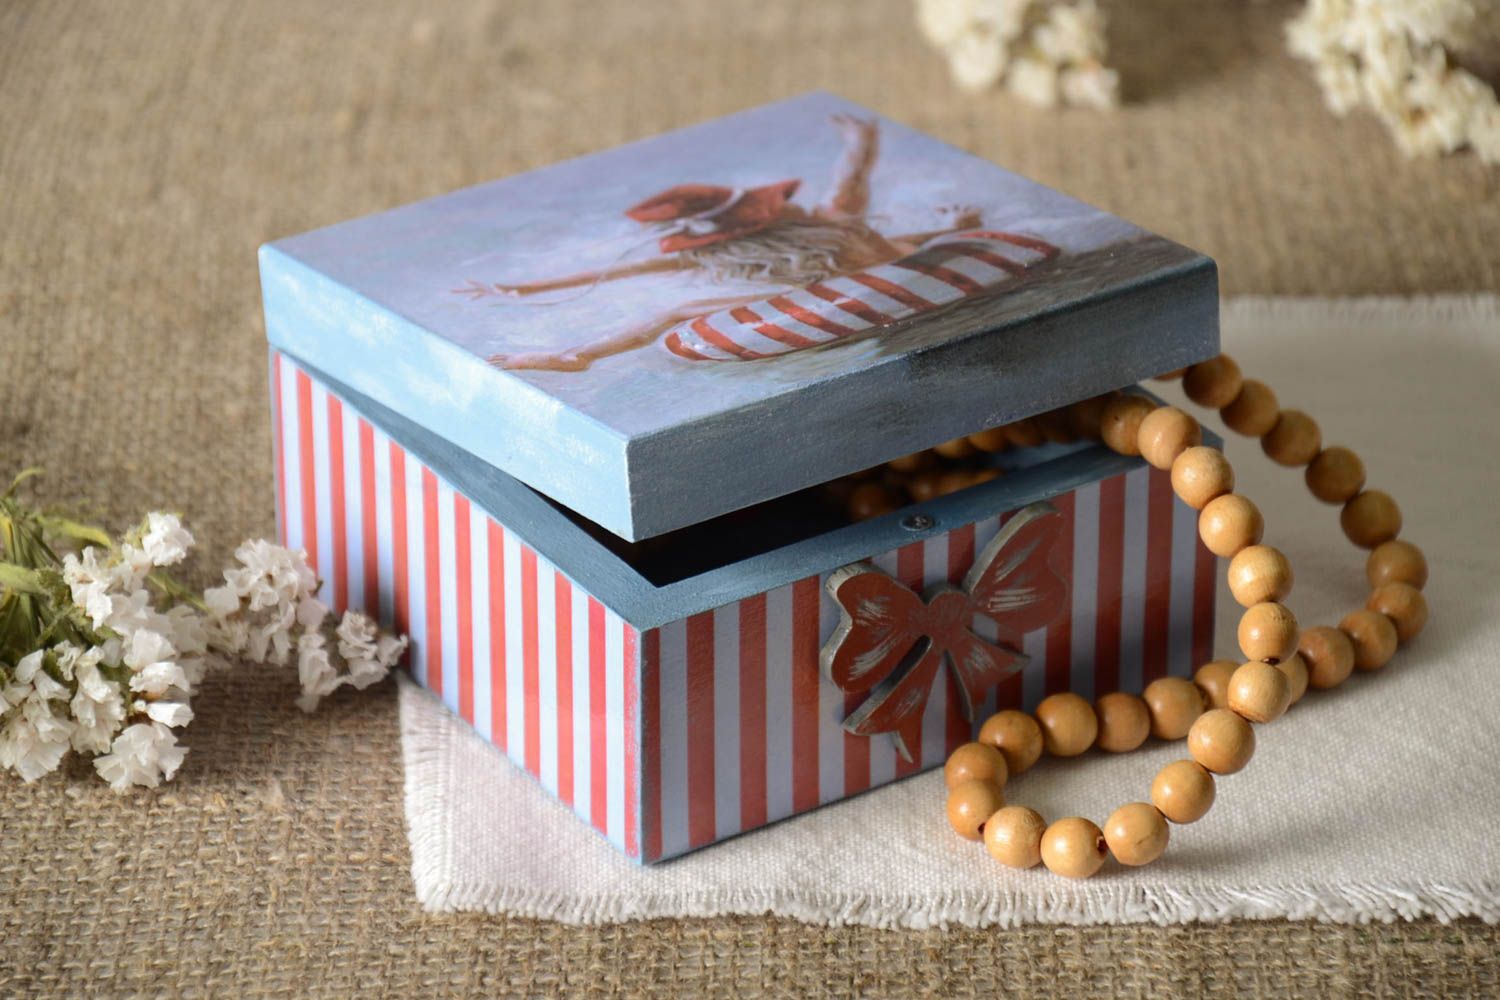 Handmade wooden box jewelry box design decoupage ideas home decoration photo 1